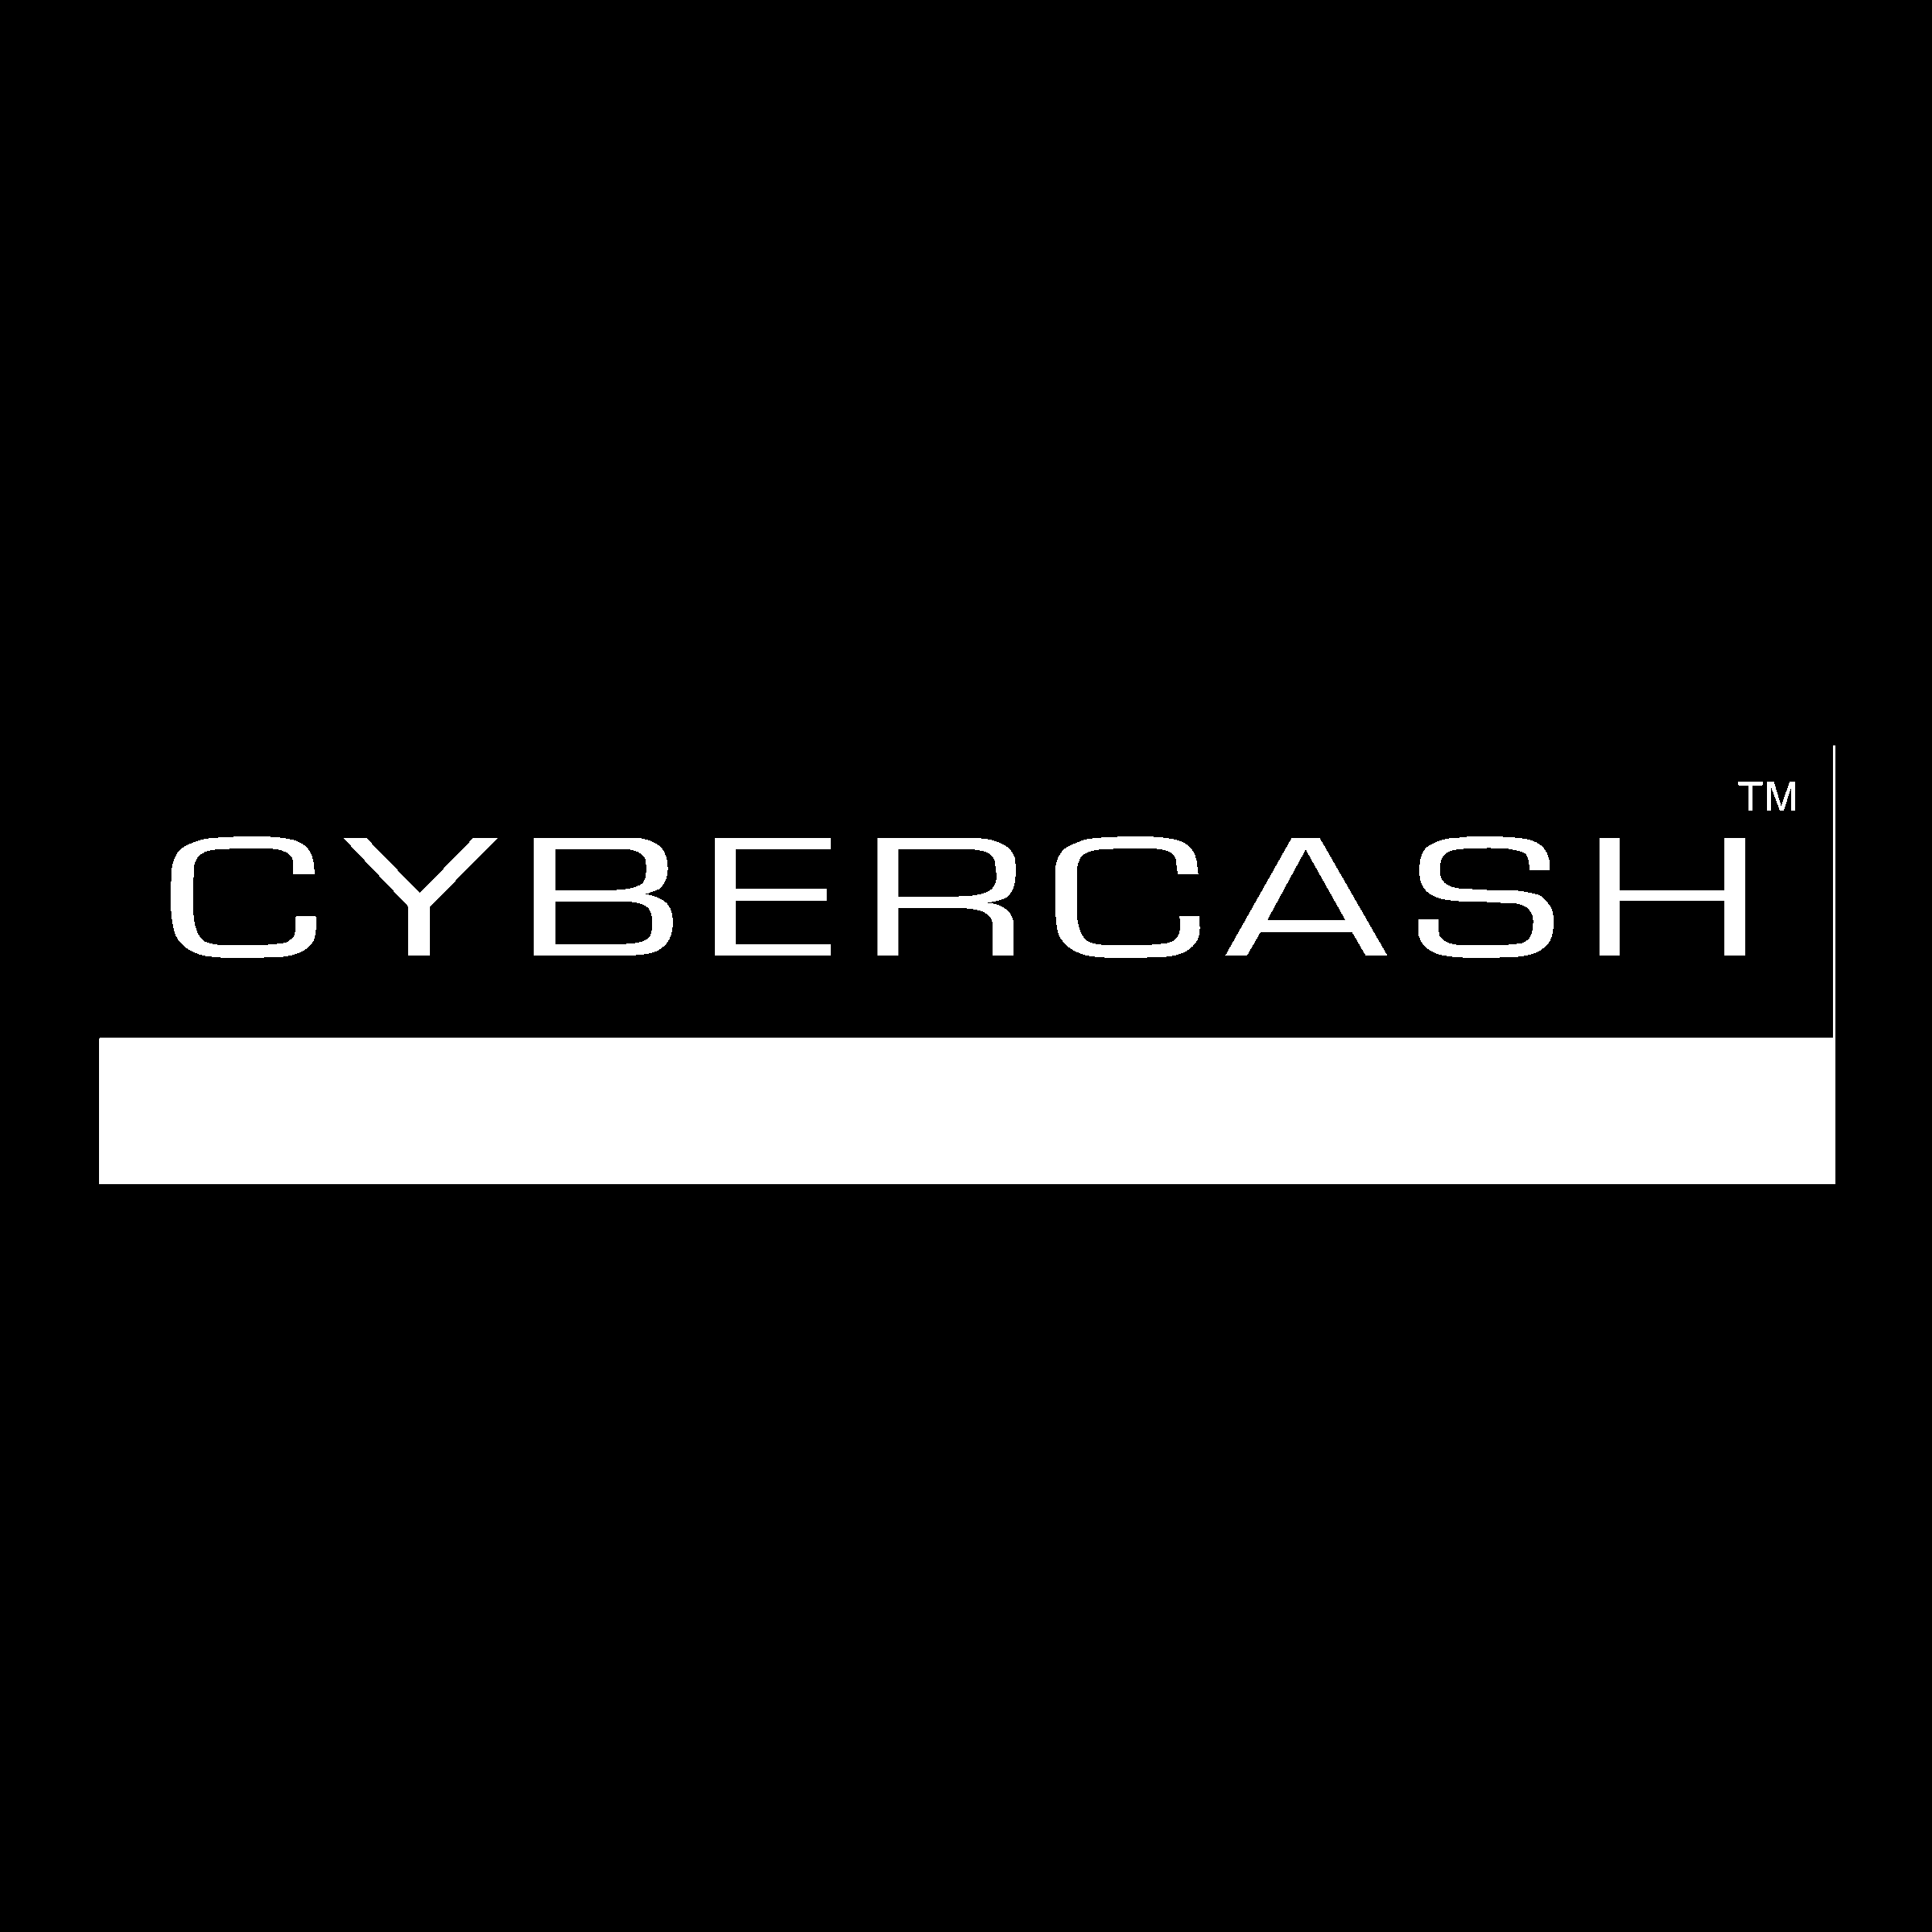 CyberCash Logo - CyberCash Logo PNG Transparent & SVG Vector